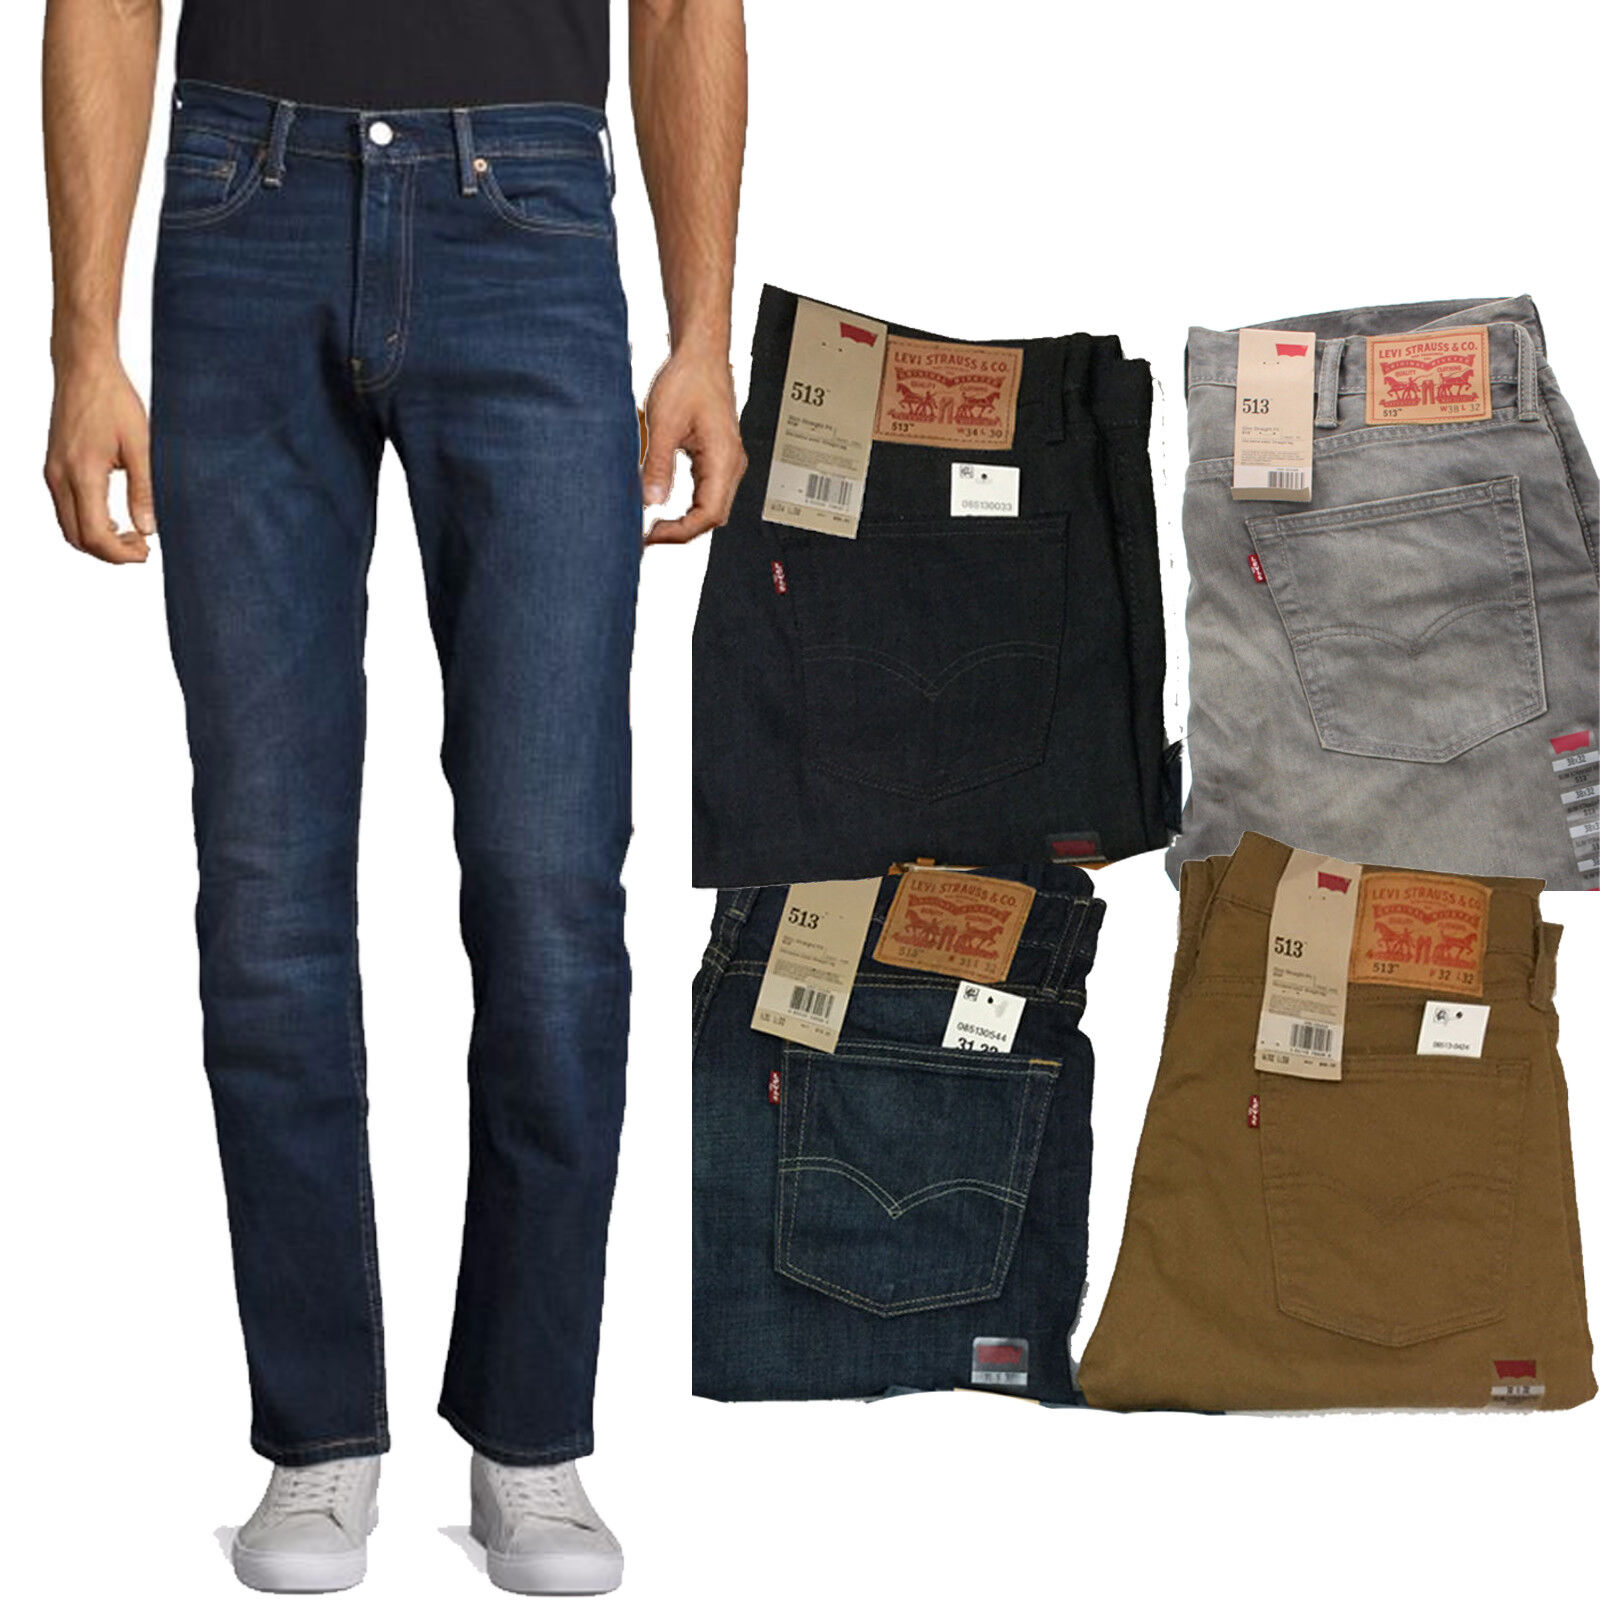 Buy Levi's 513 Jeans Mens Slim Fit Straight Stretch Denim Pants Levi  Strauss Online at Lowest Price in Ubuy Vietnam. 253668709719